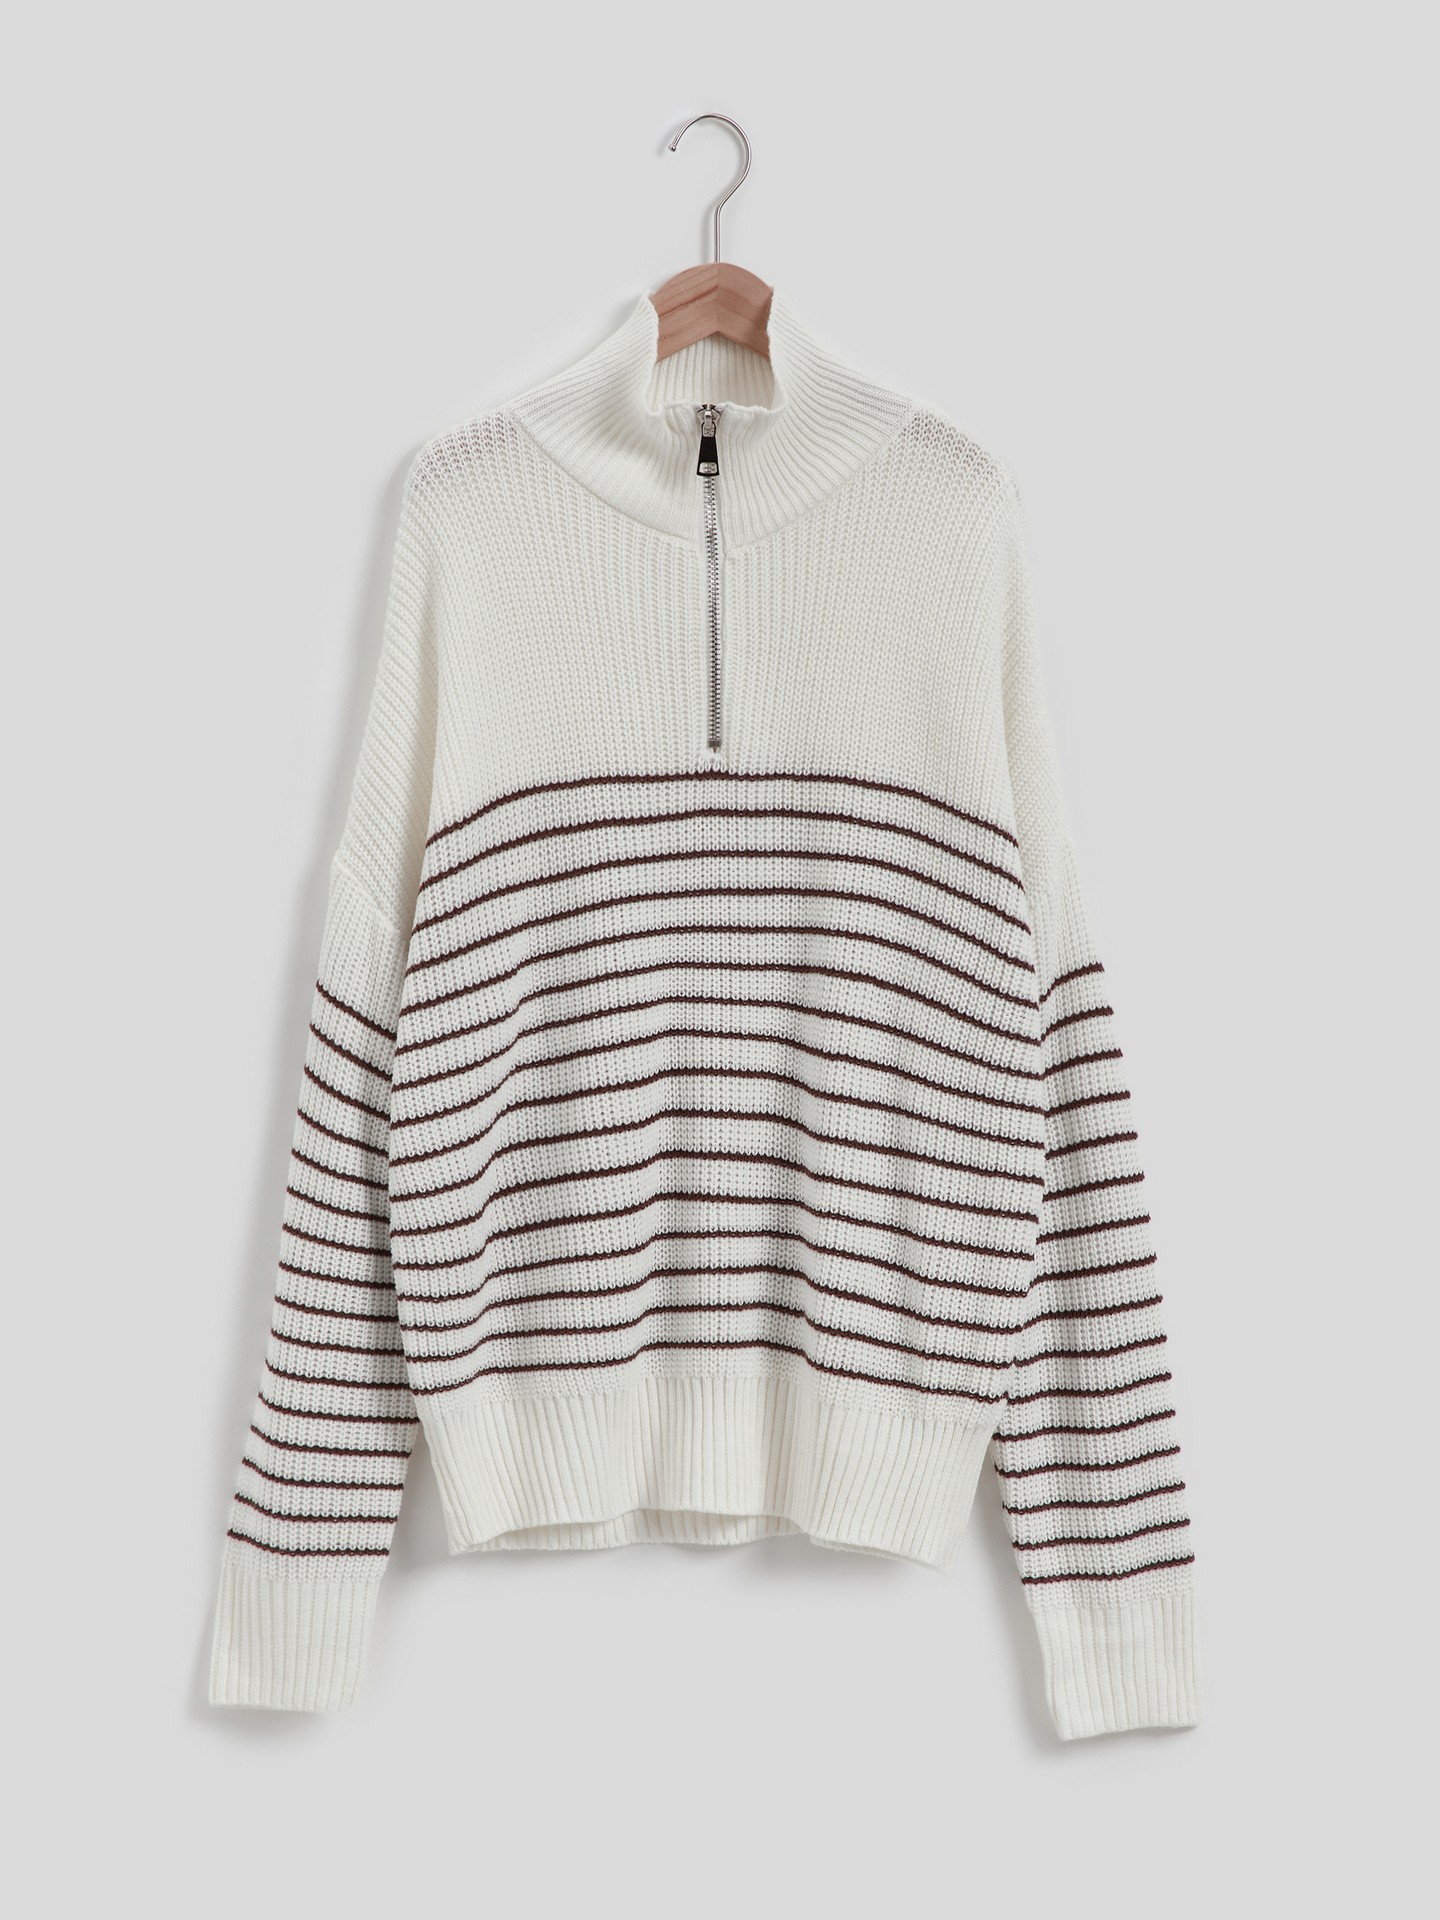 Zip Up Sweatshirt丨Urbanic